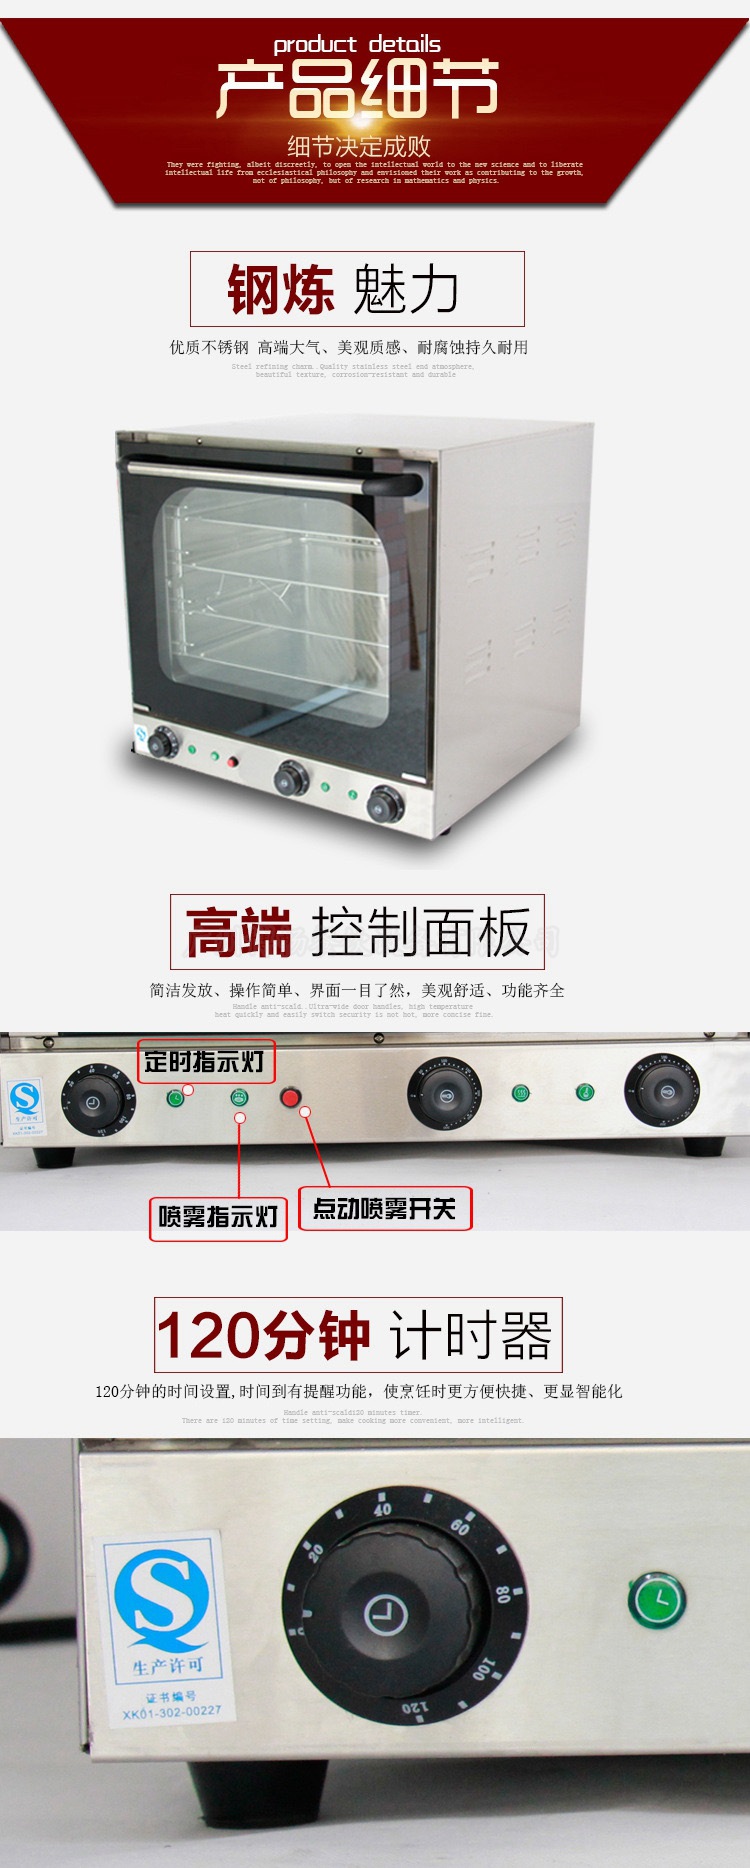 BEB-4A全透视热风循环电焗炉四层商用多功能电烤箱 厂家直销